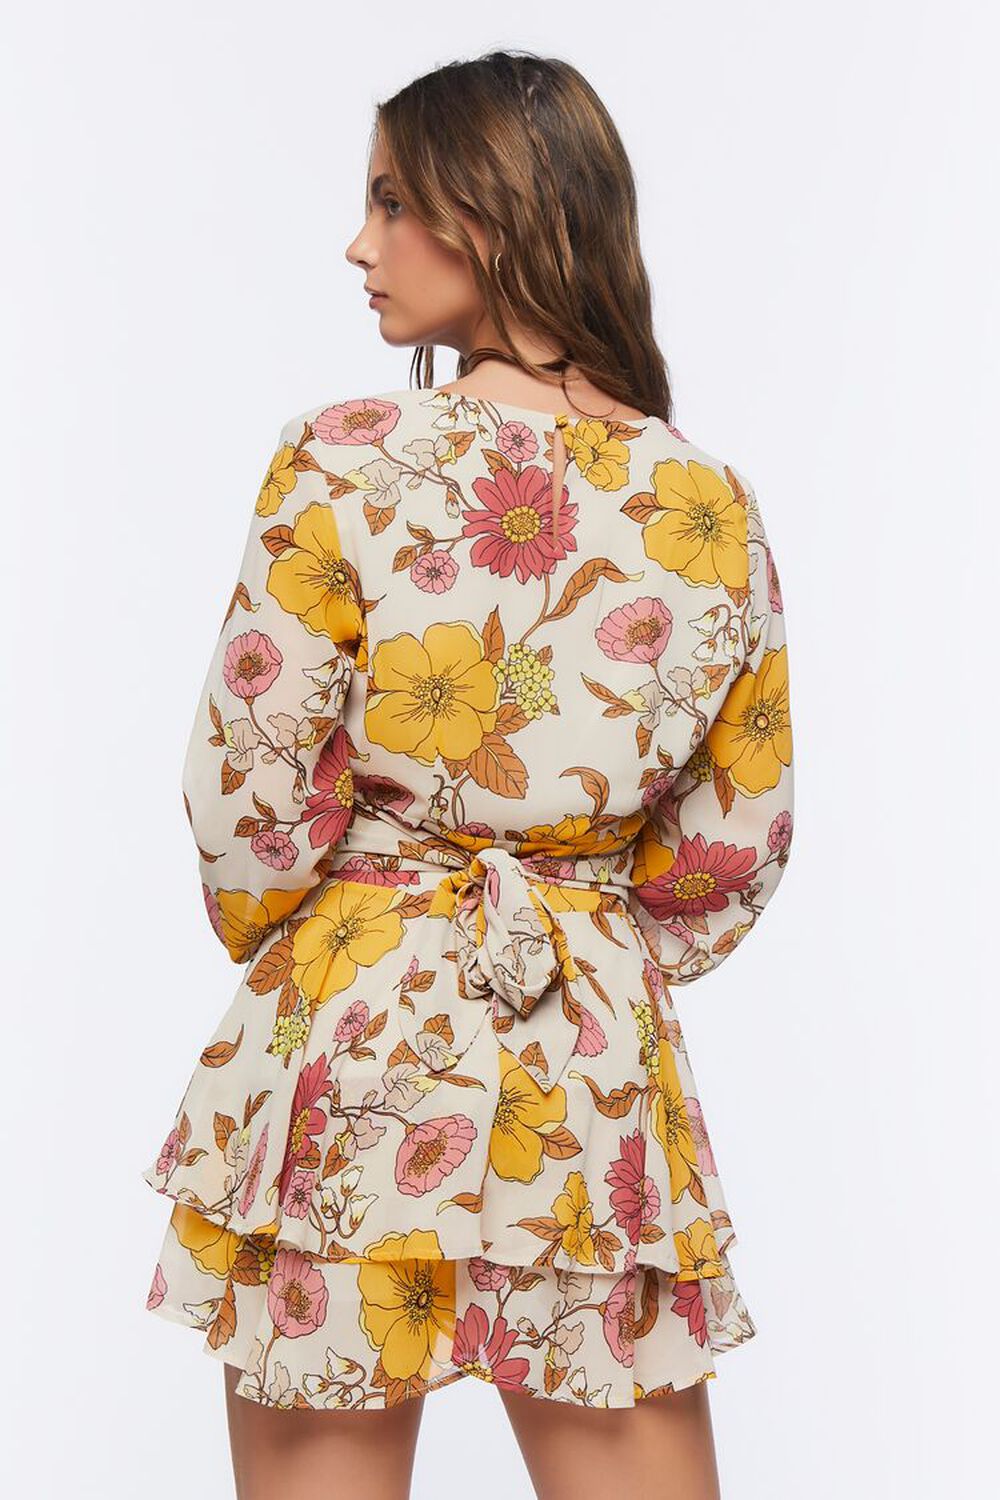 TAUPE/MULTI Floral Print Chiffon Mini Dress, image 3